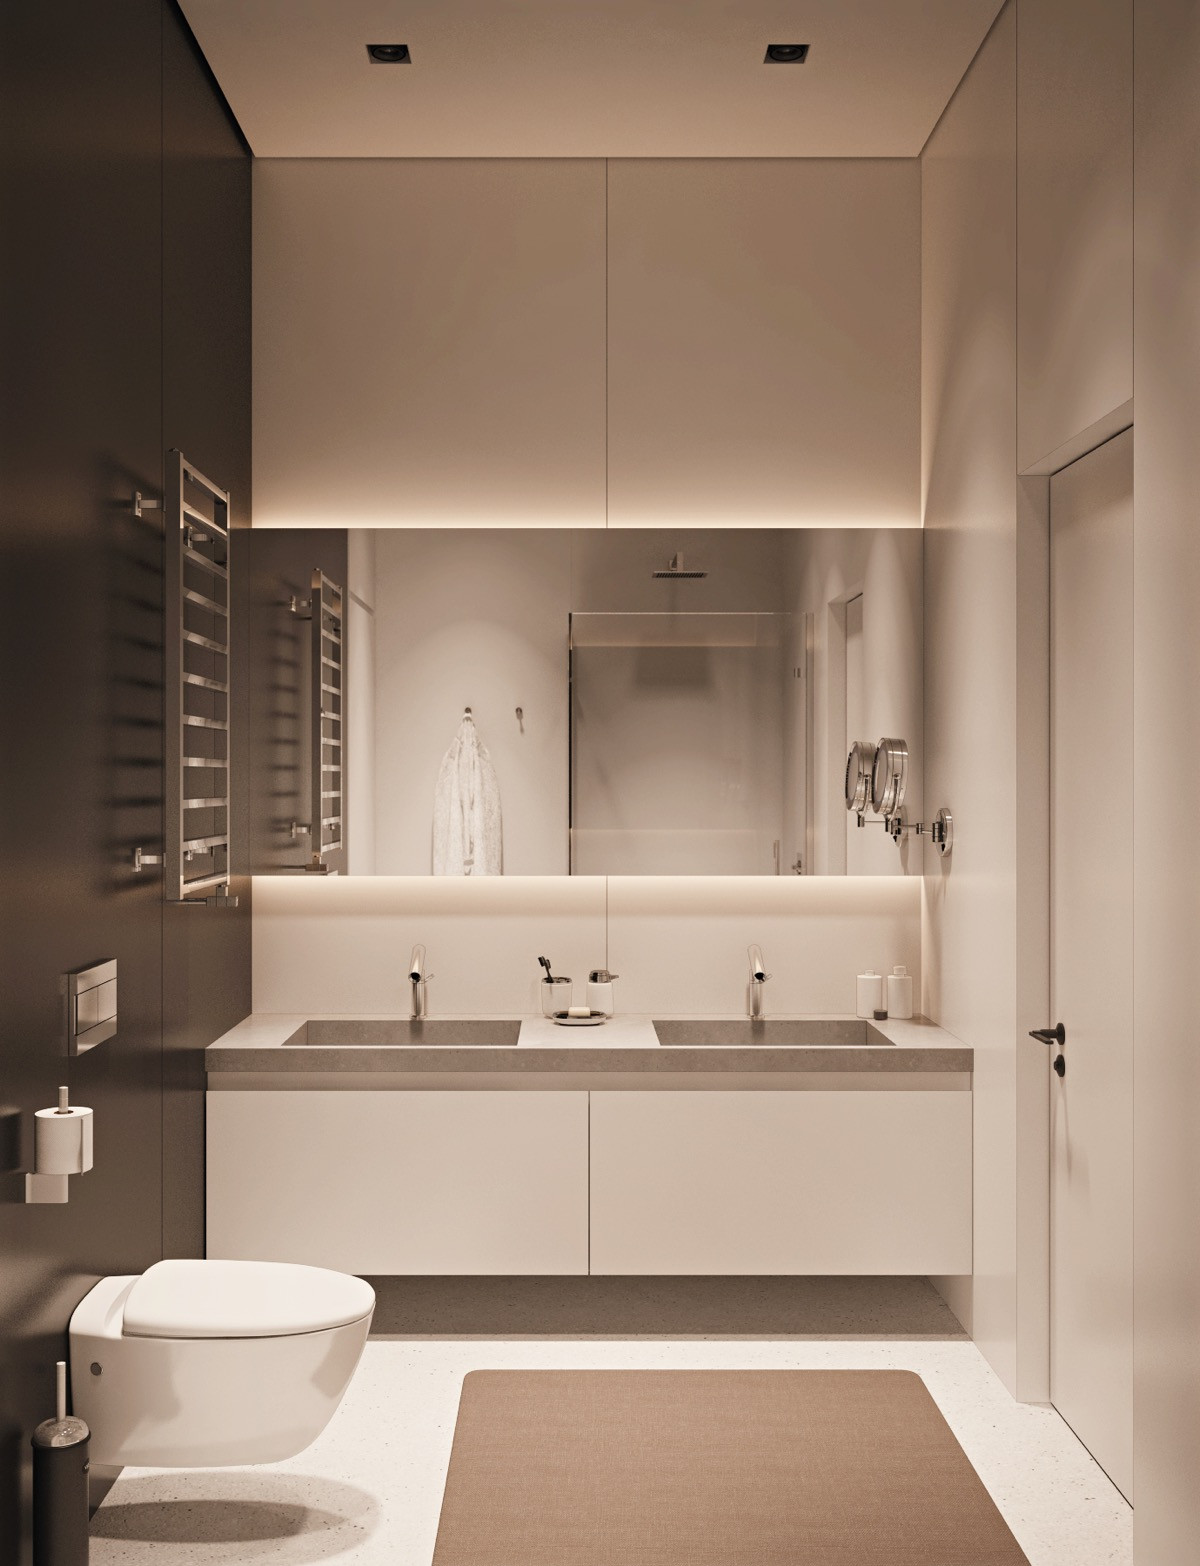 Best ideas about Bathroom Interior Design
. Save or Pin 40 Modern Minimalist Style Bathrooms Now.